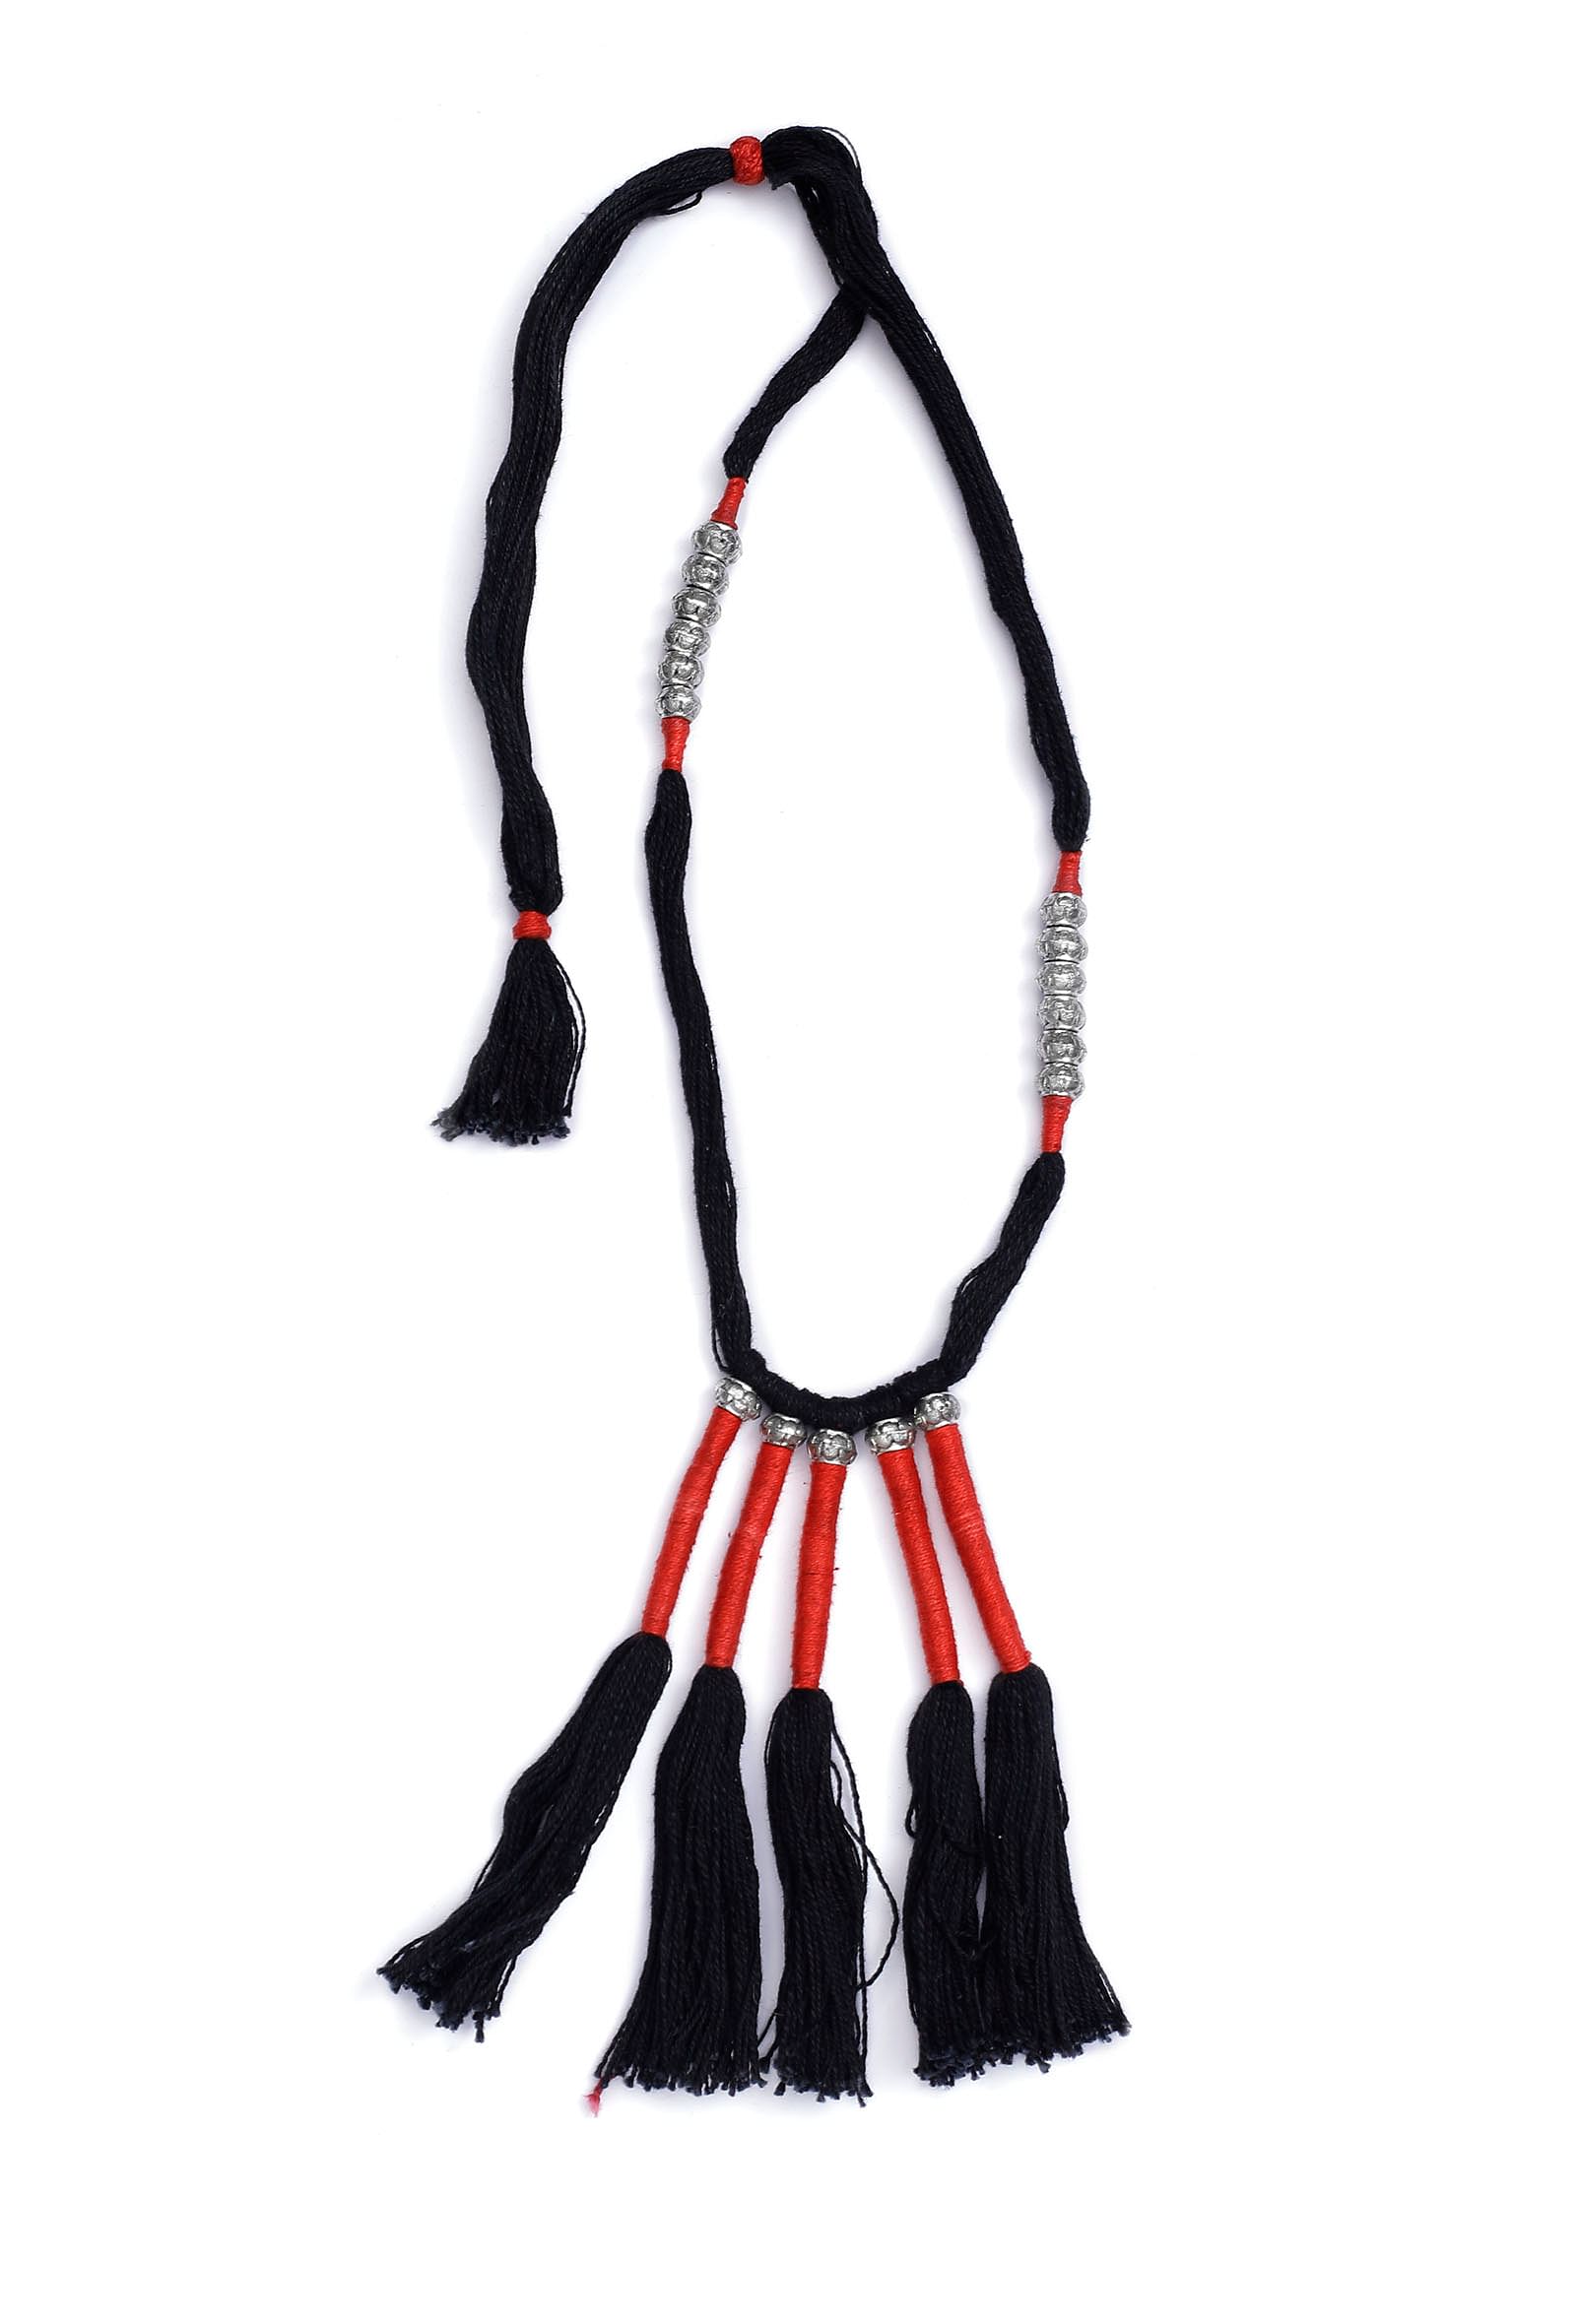 Lishika Red and Black Tassels Tribal Necklace